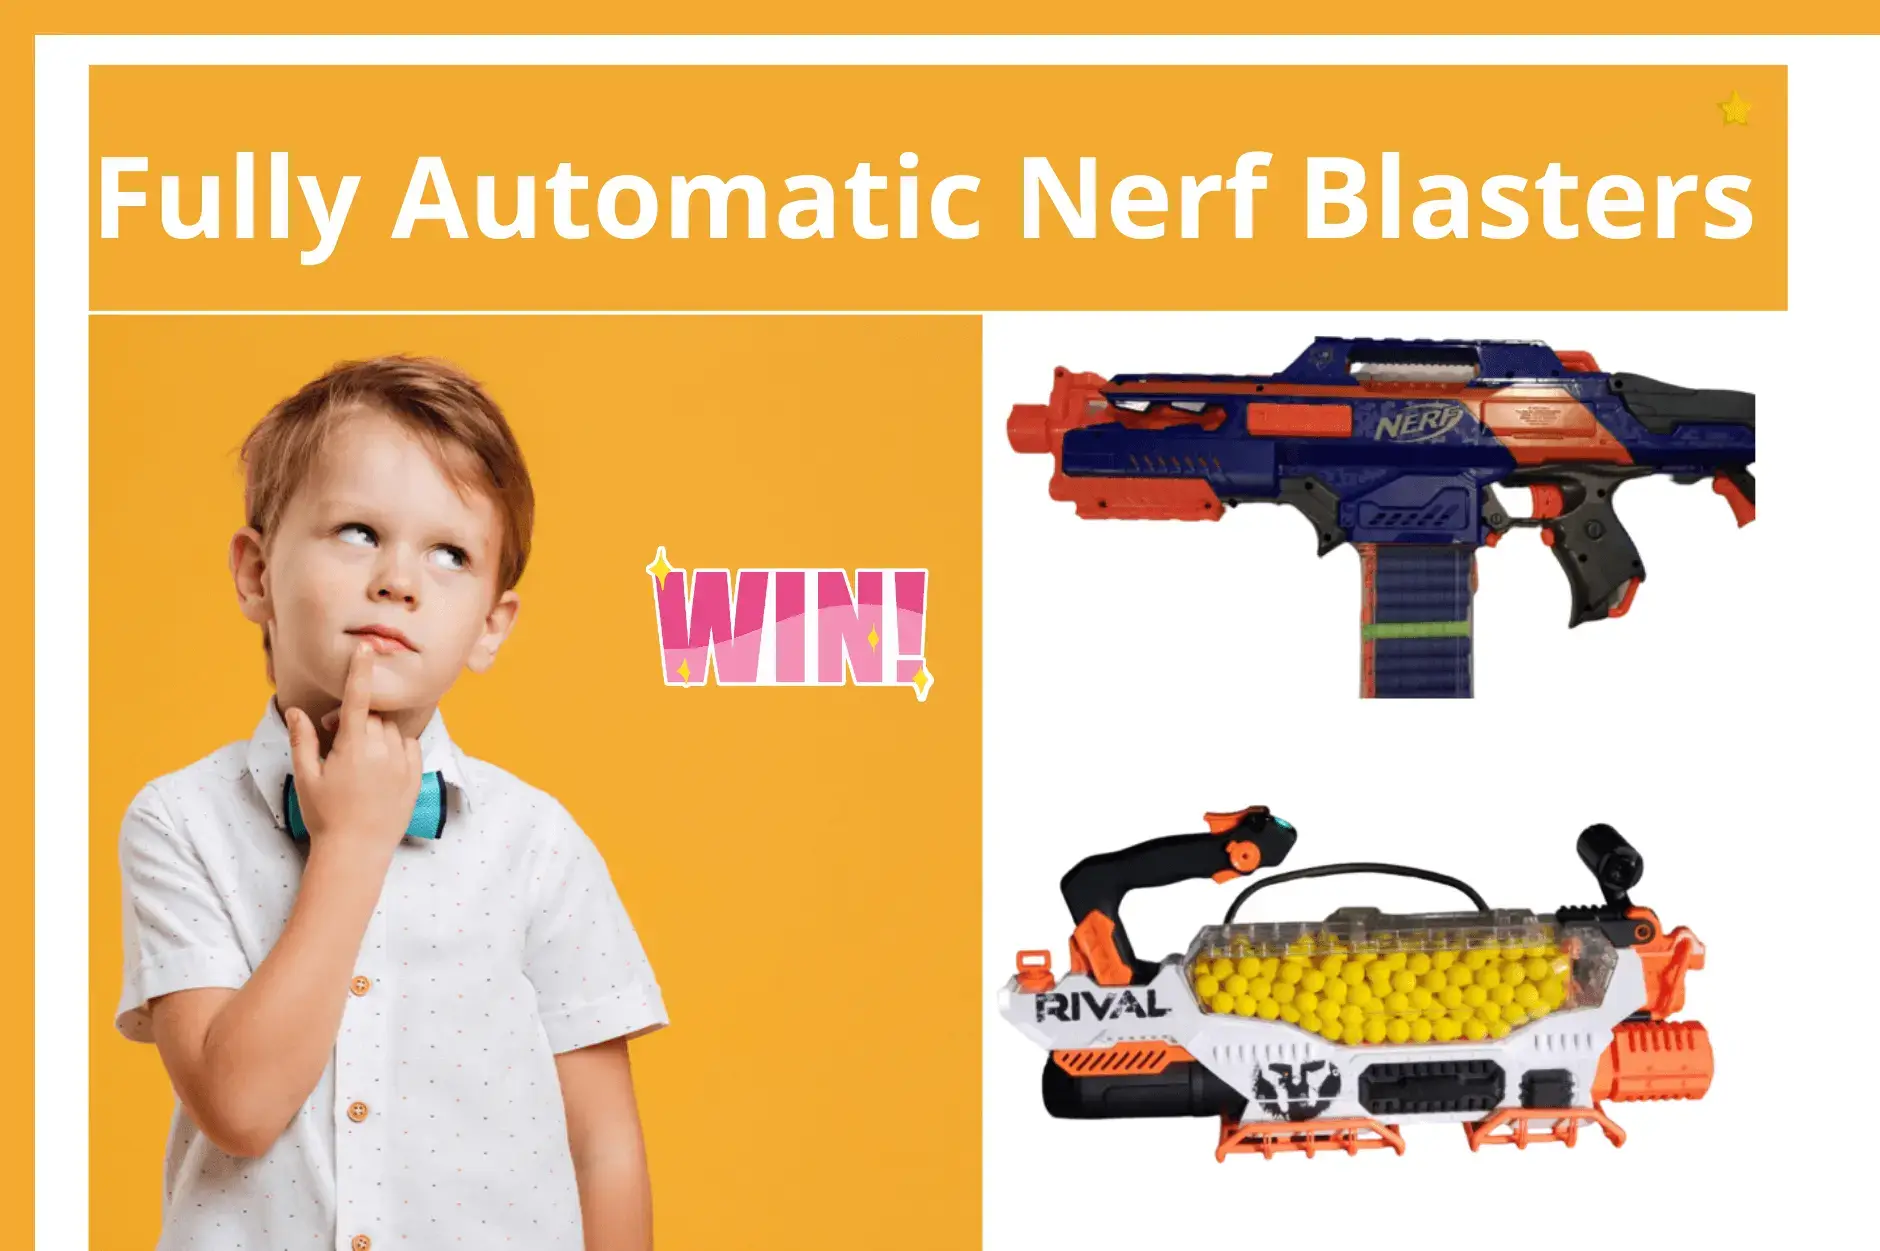 Fully Automatic Nerf guns